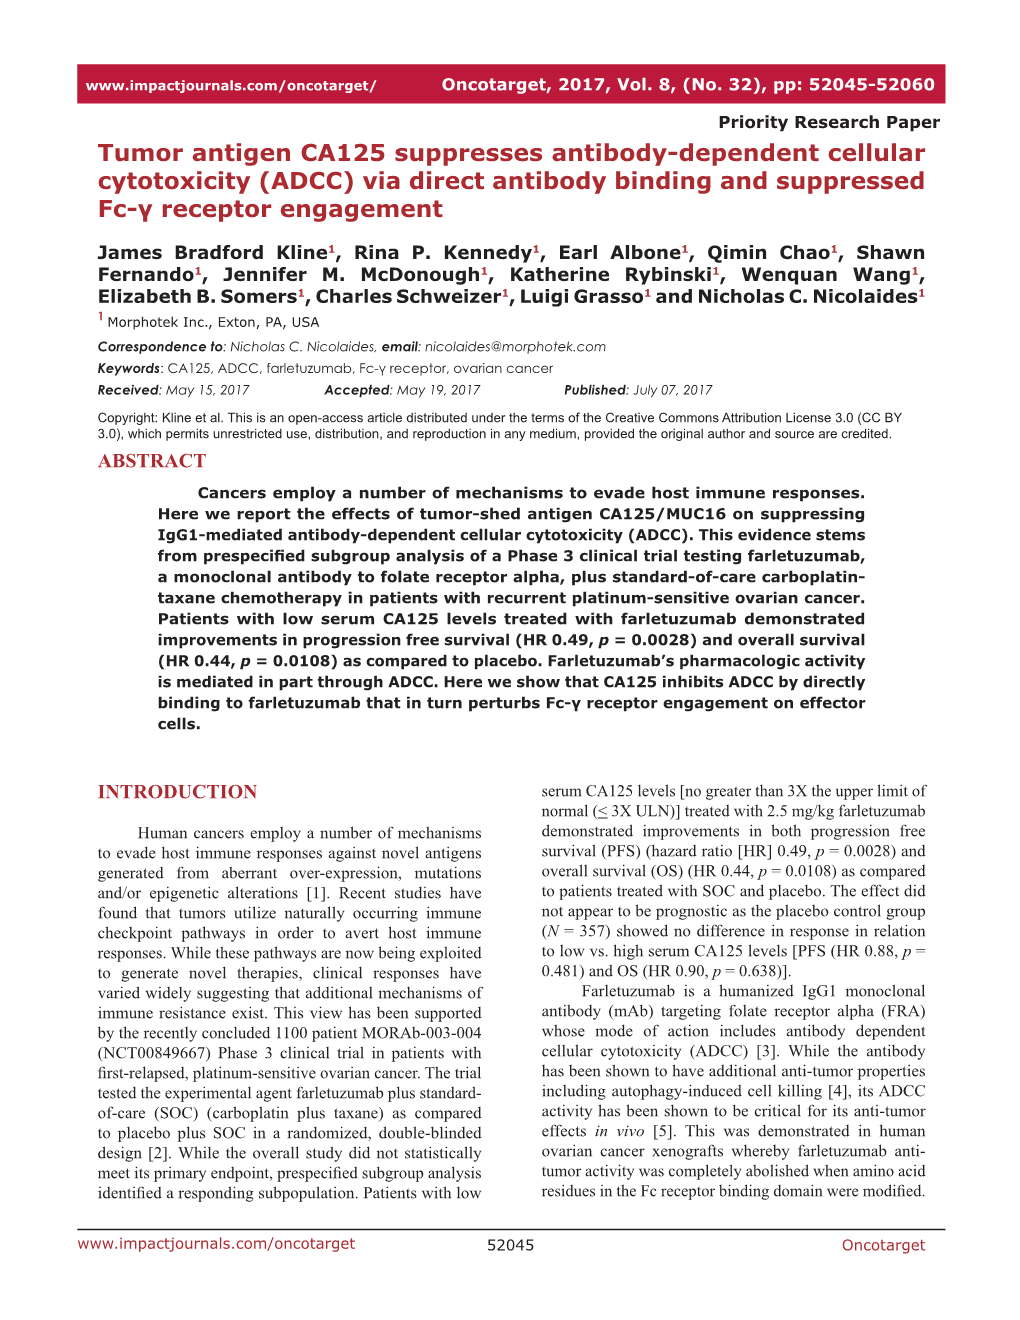 Tumor Antigen CA125 Suppresses Antibody-Dependent Cellular Cytotoxicity (ADCC) Via Direct Antibody Binding and Suppressed Fc-Γ Receptor Engagement